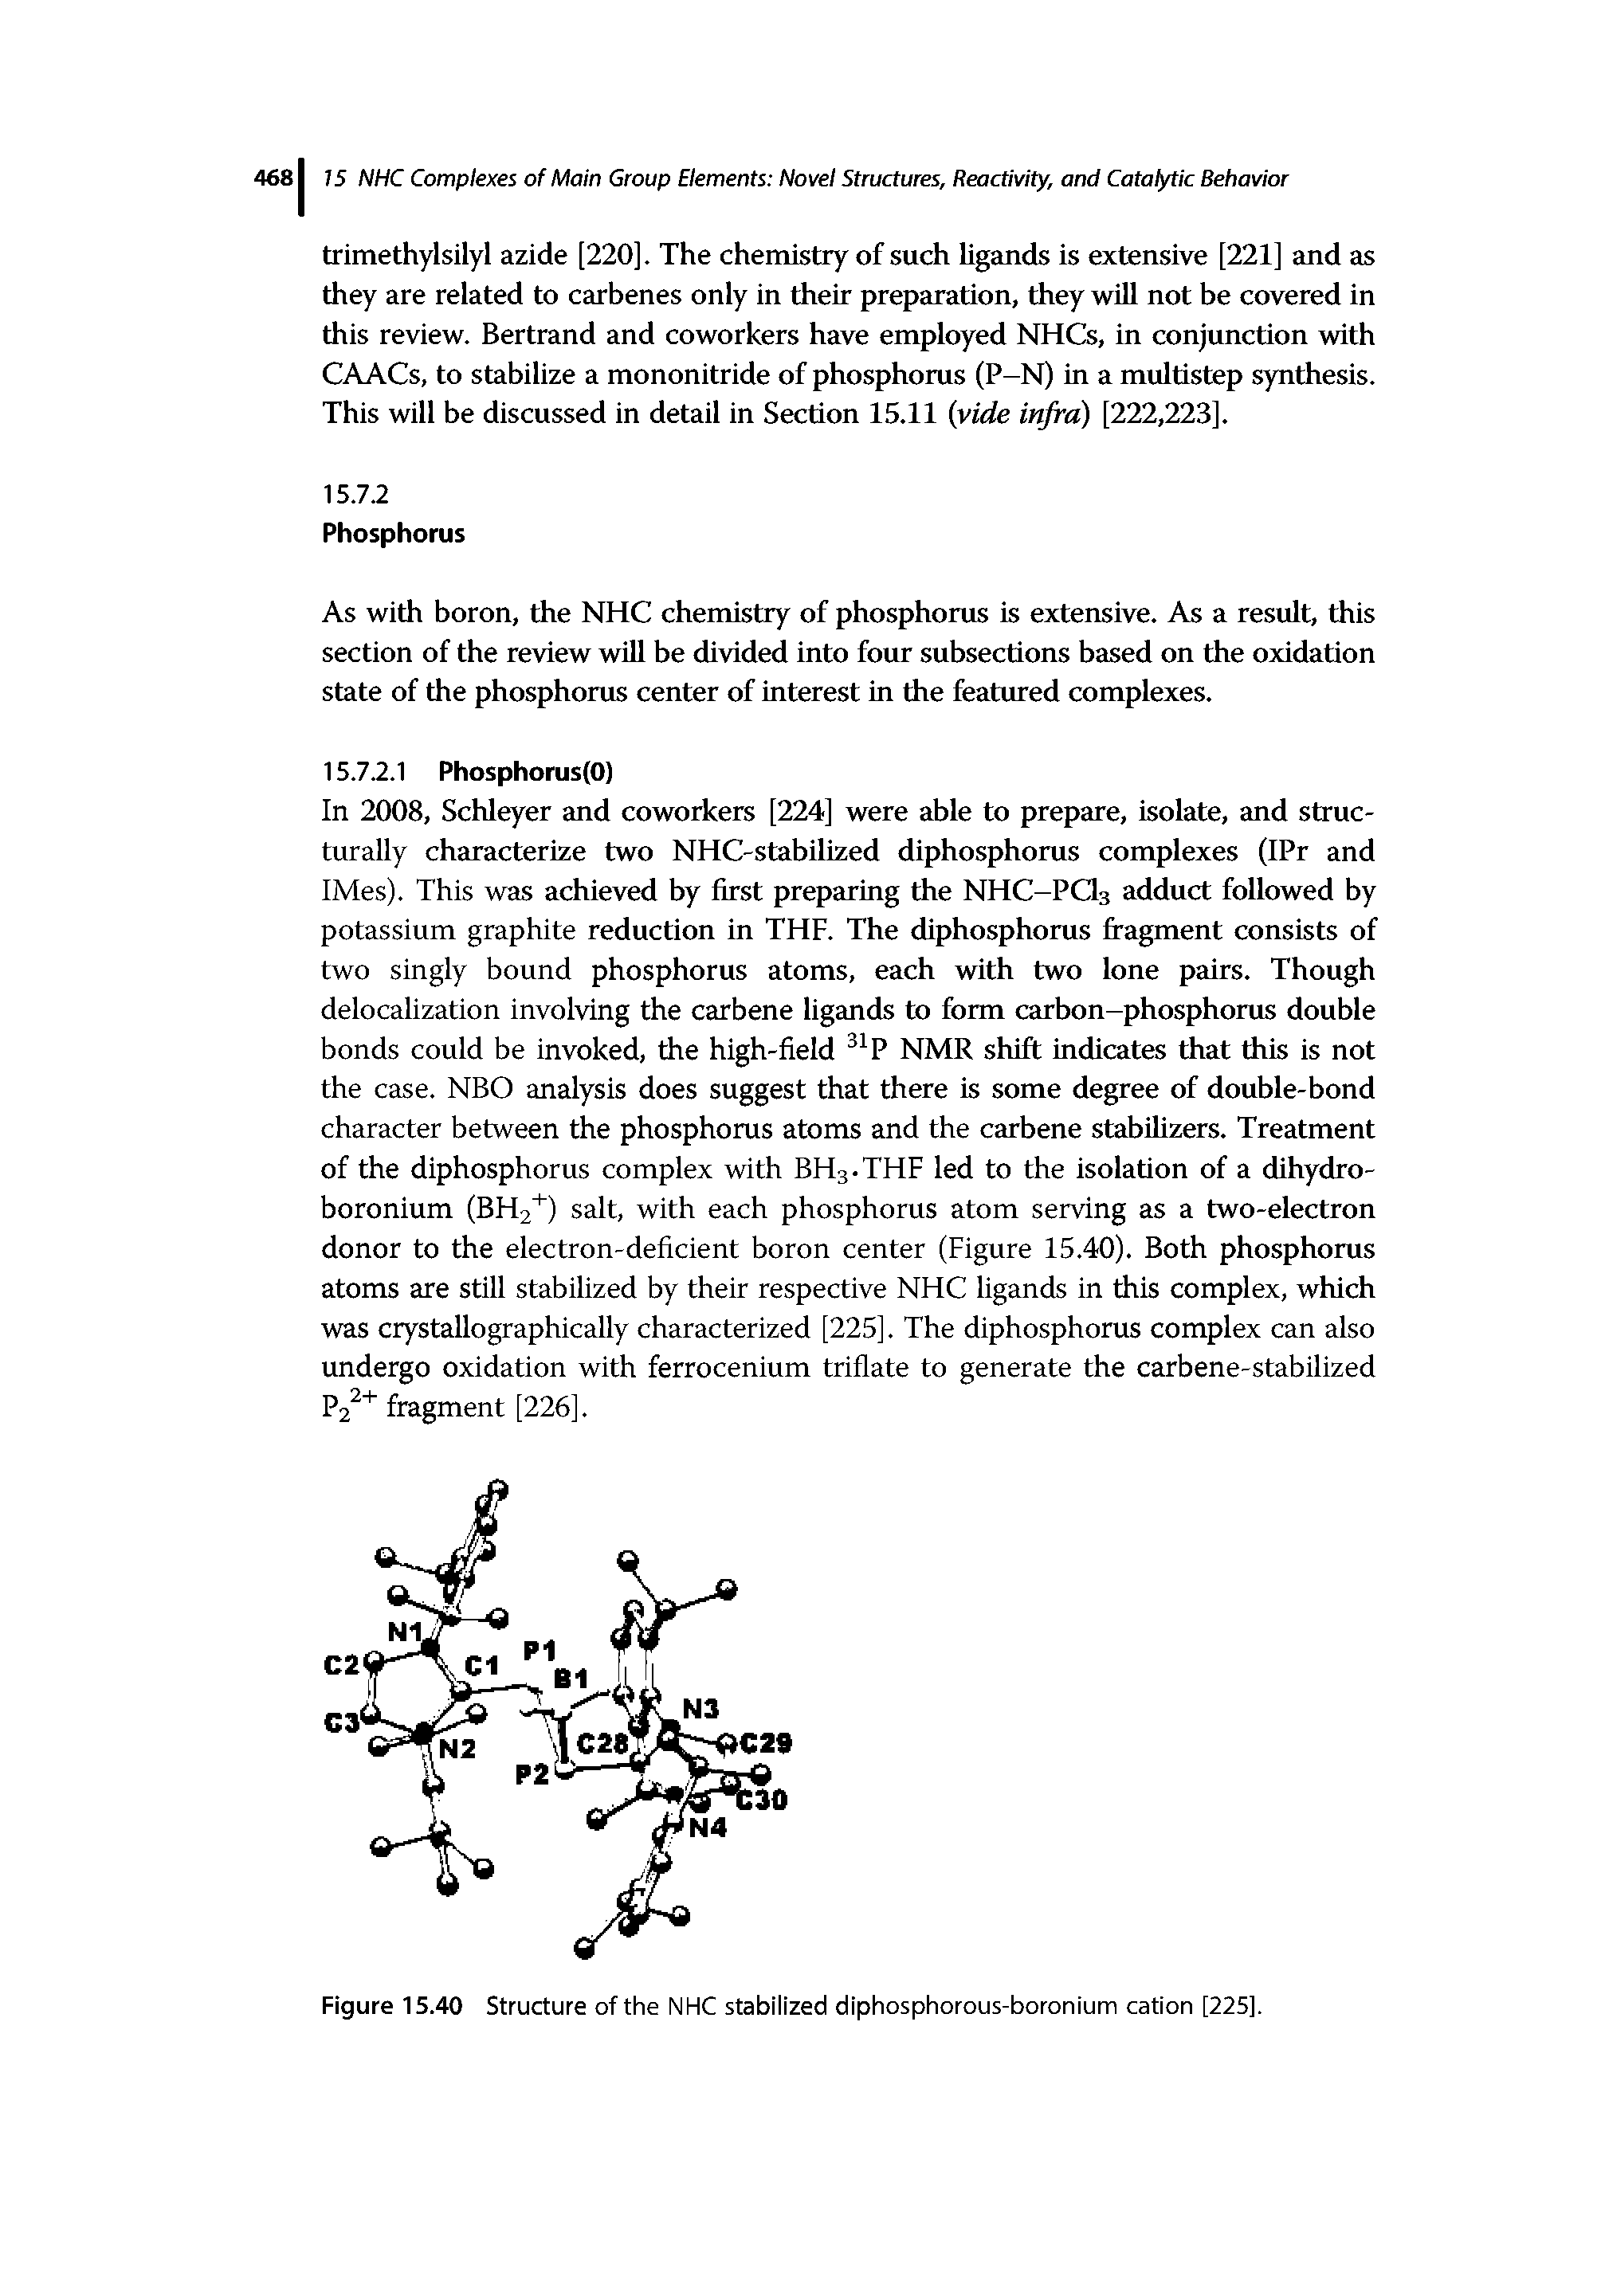 Figure 15.40 Structure of the NHC stabilized diphosphorous-boronium cation [225],...